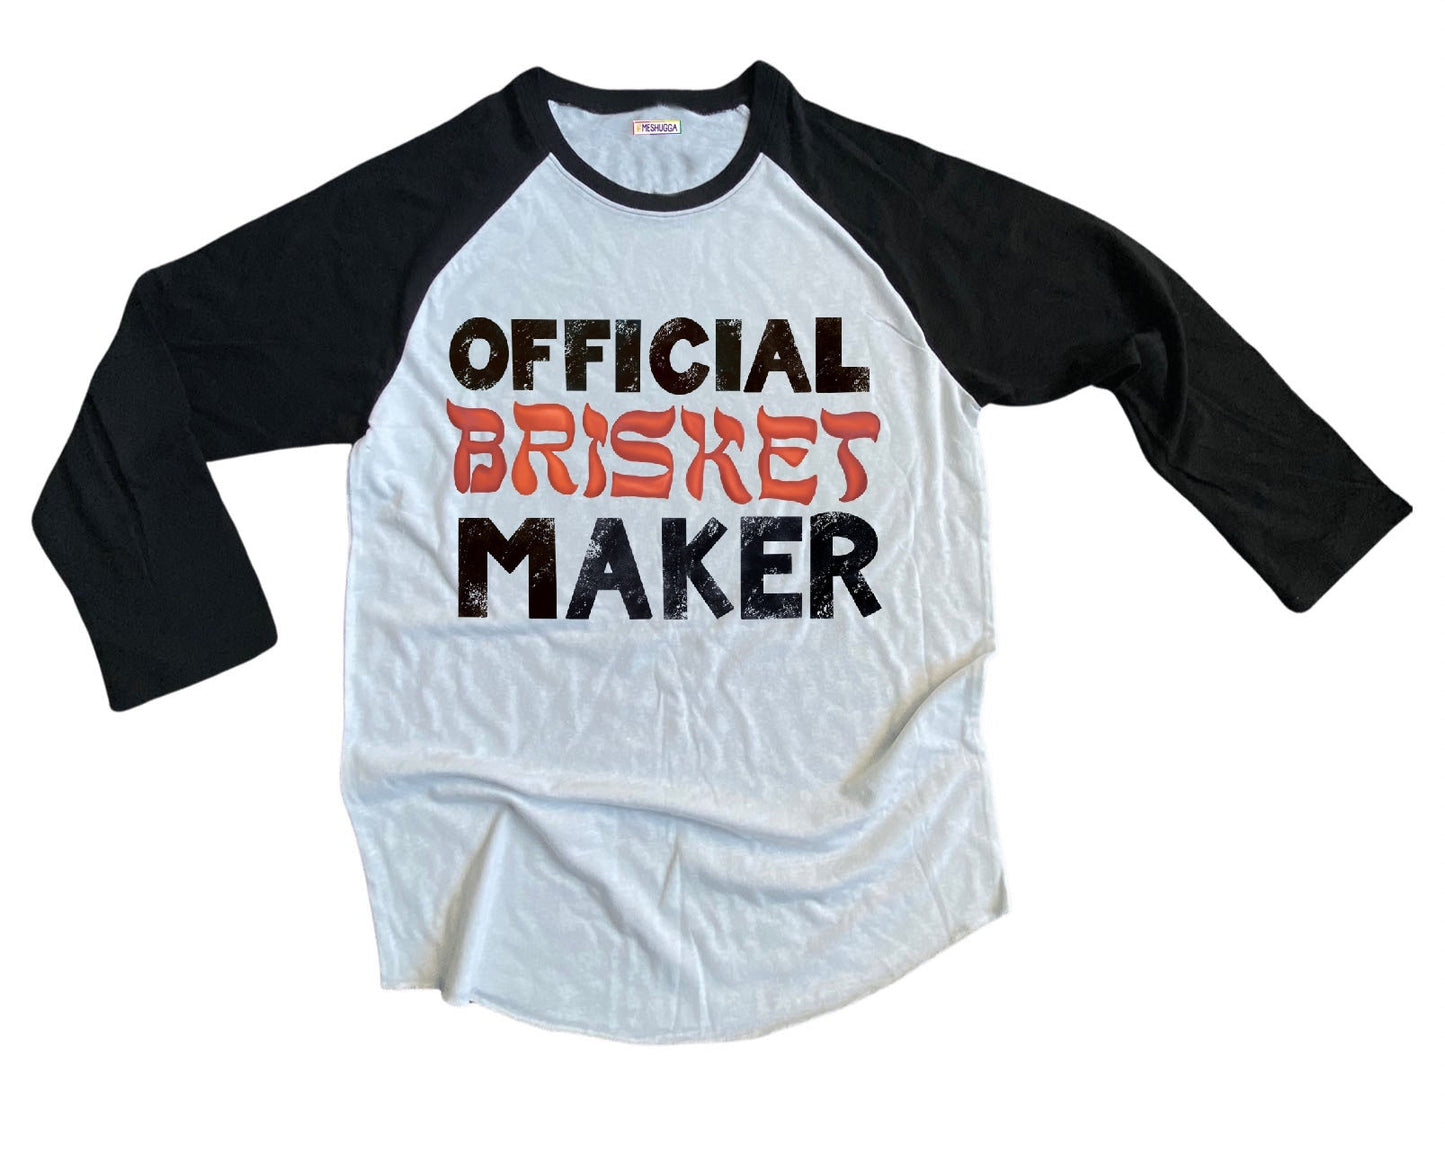 Official Brisket Maker Baseball Shirt - Adult